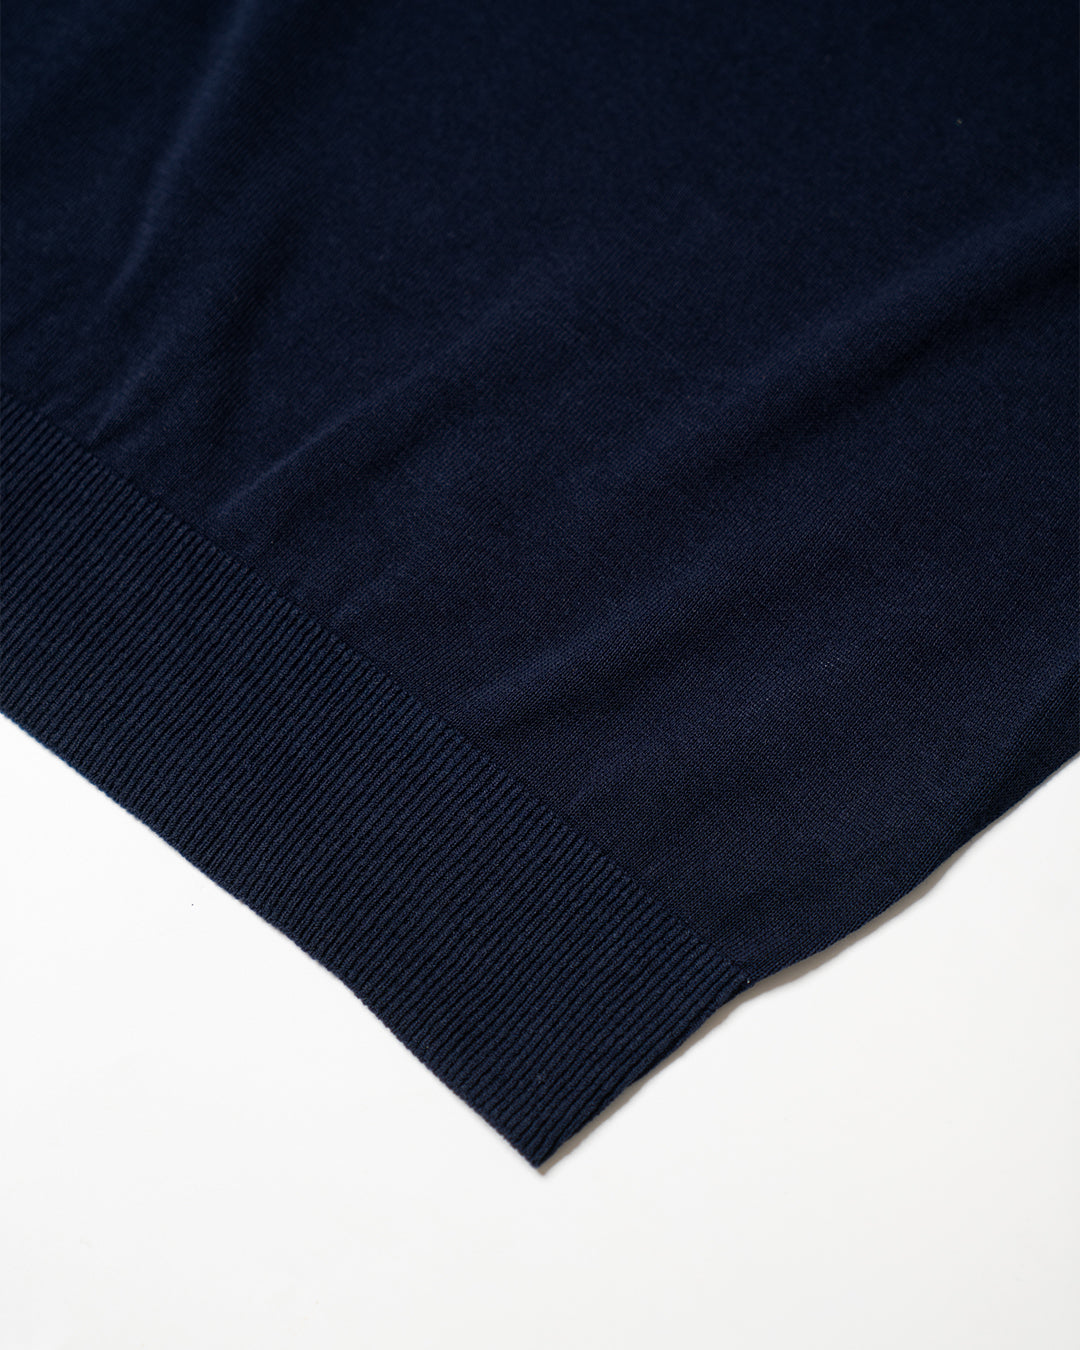 The Decorum Off Duty Navy Knit T-Shirt (New)